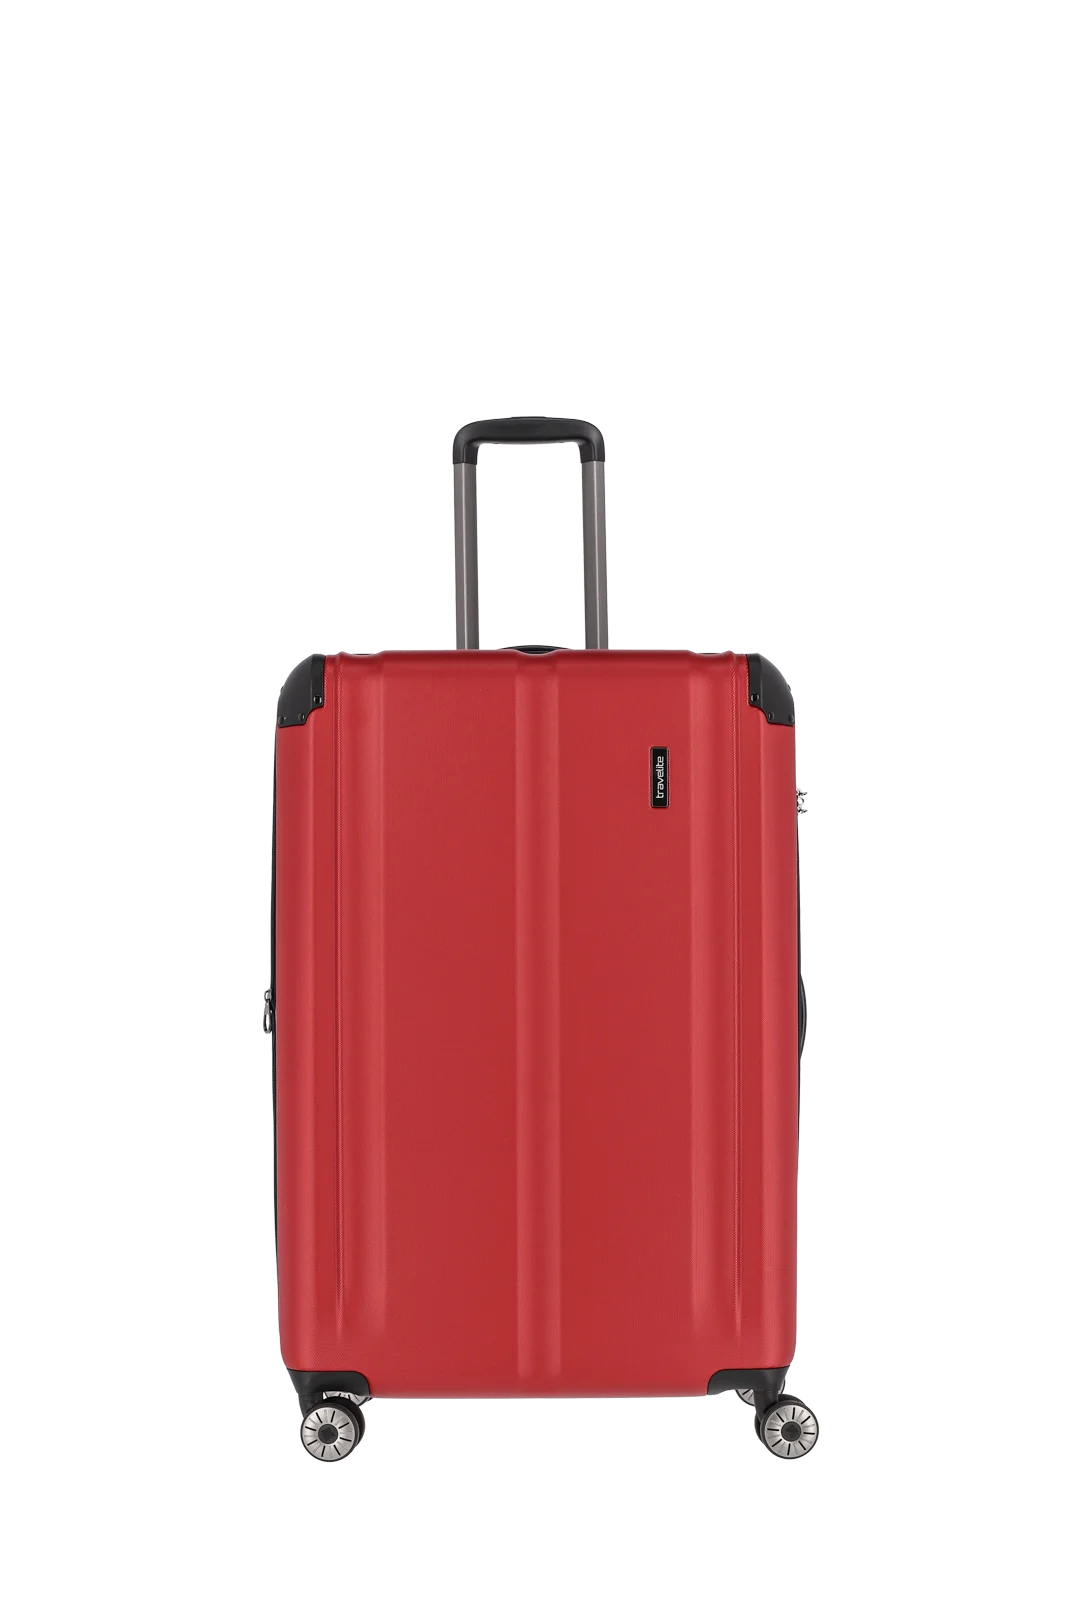 Next Aluminium suitcase + front pocket size s silver - travelite